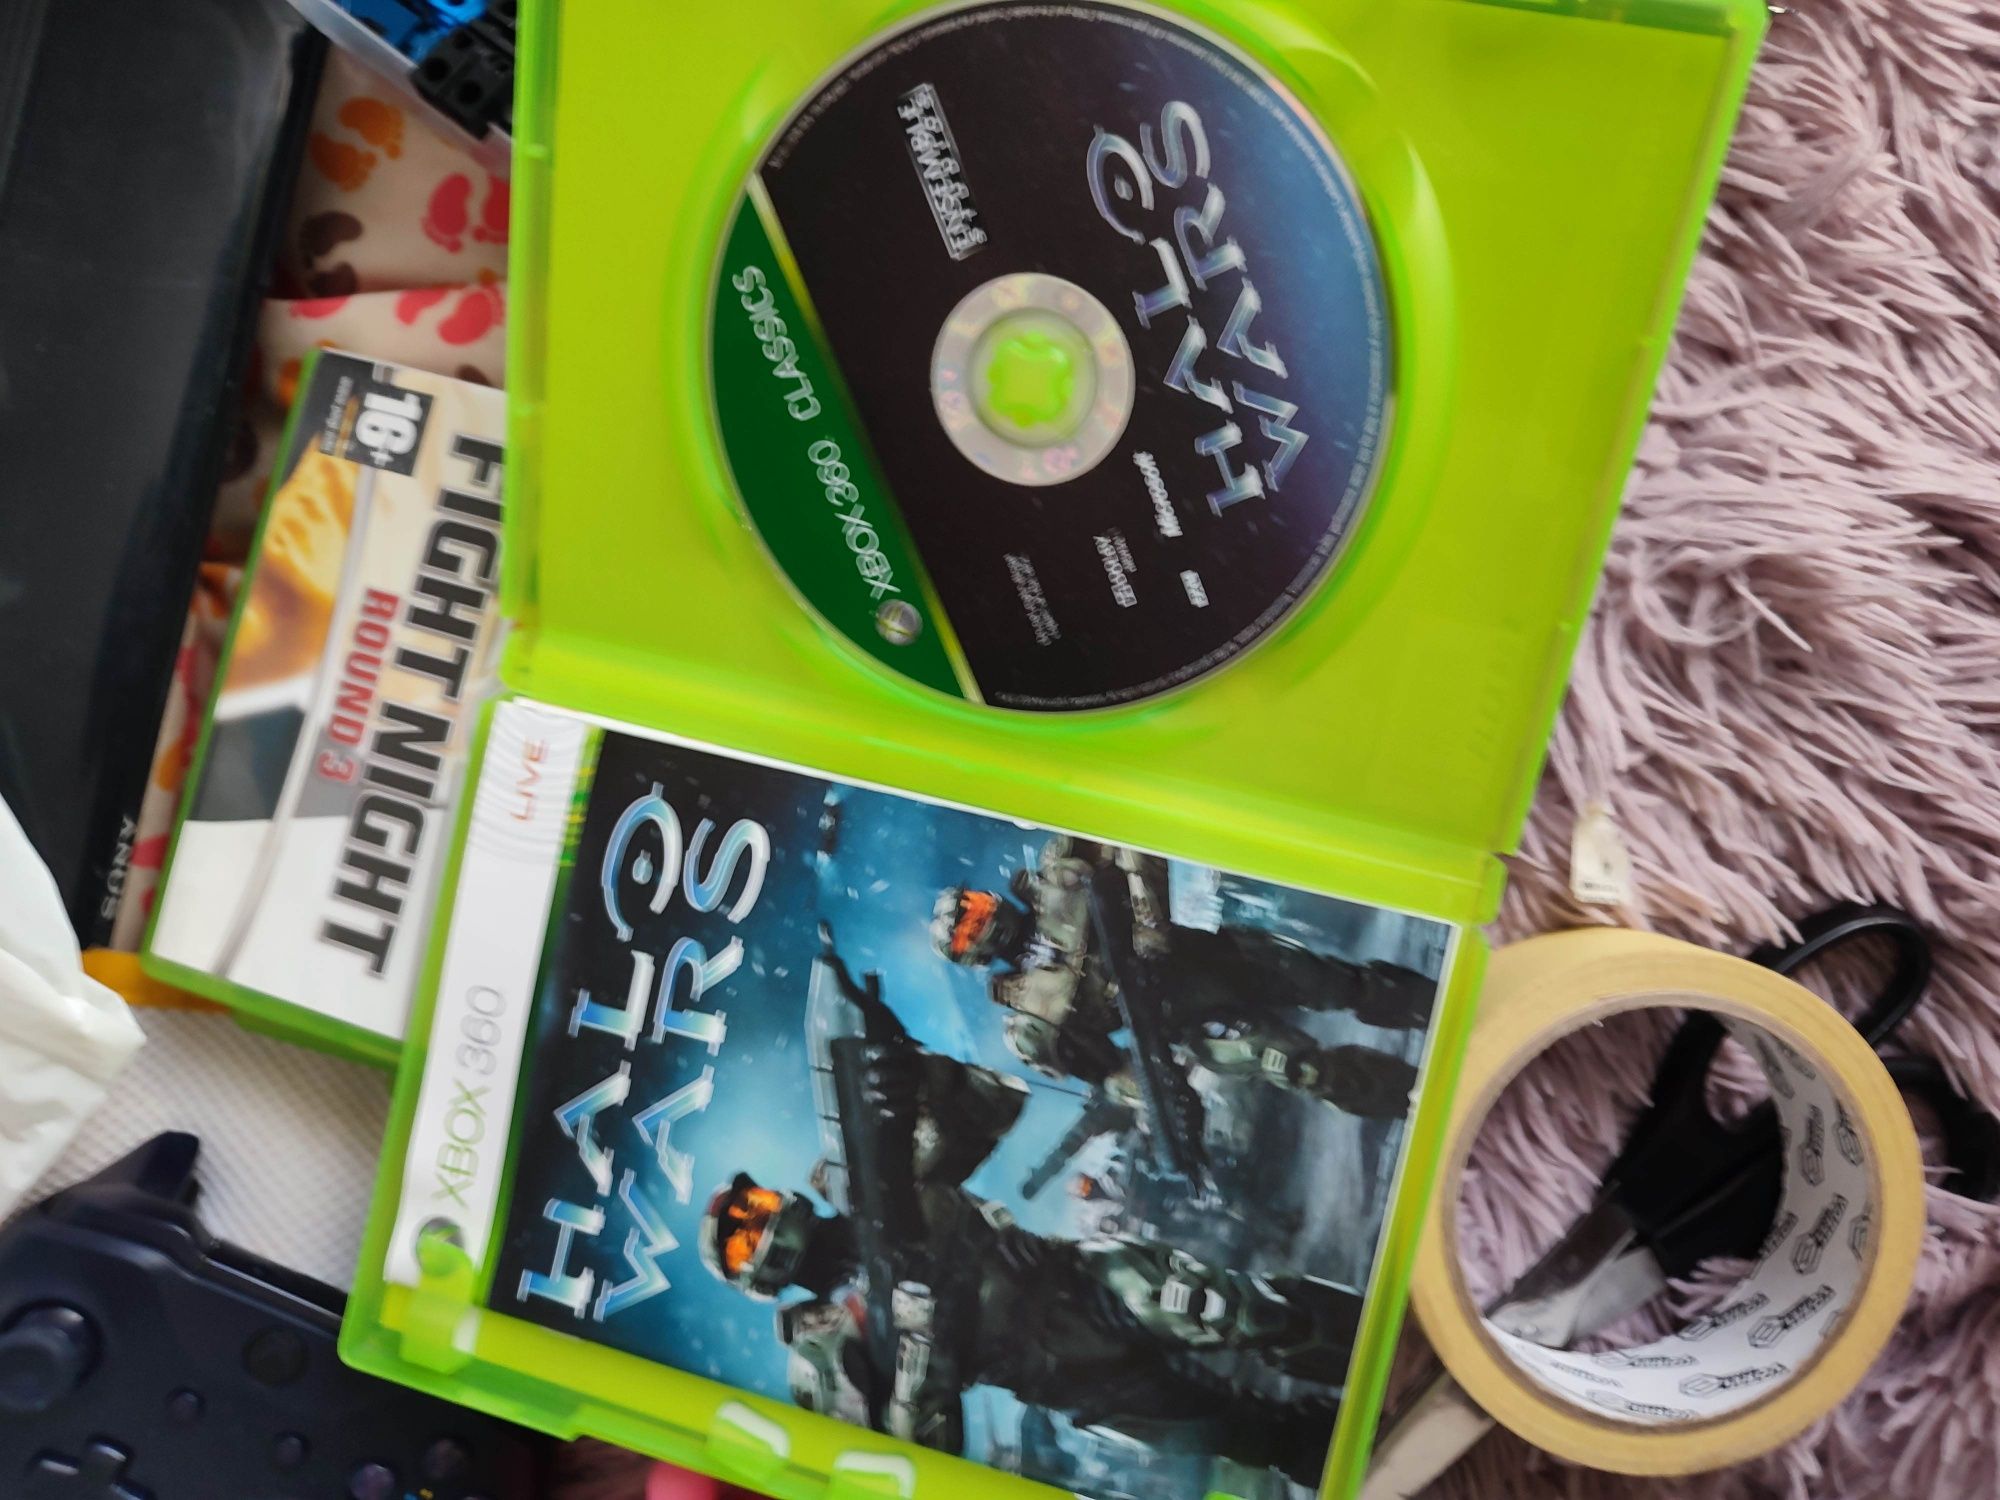 Halo Wars xbox360. Xbox 360. X360